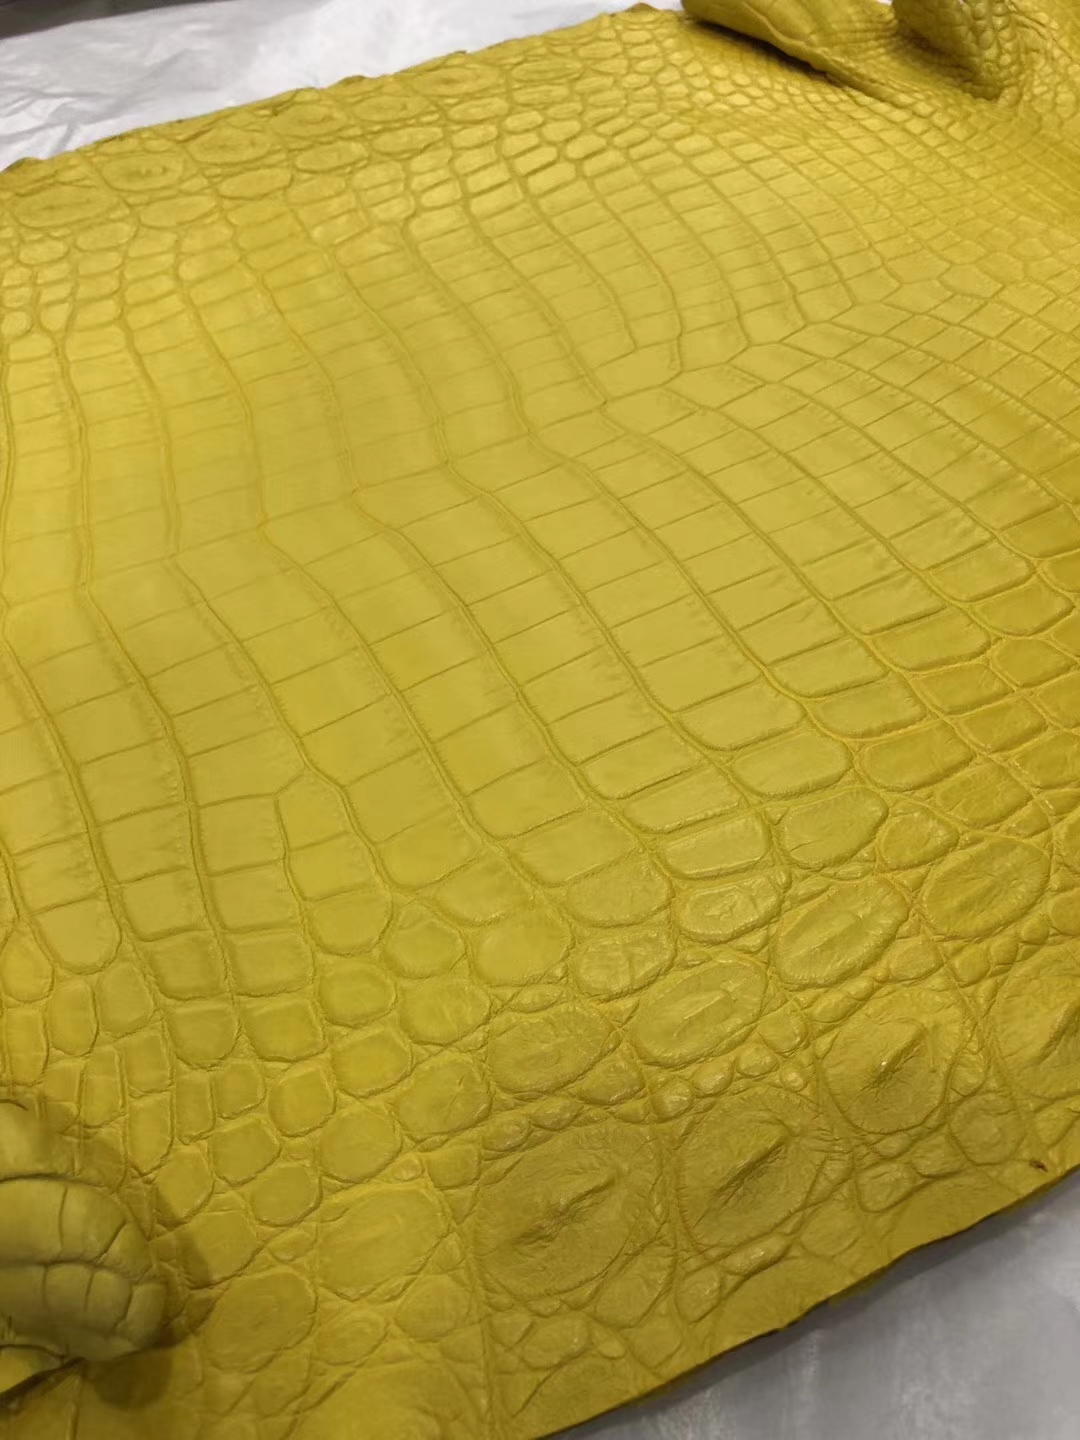 Hermes Kelly/Birkin Bag Order 9R Lemon Yellow Crocodile Matt Leather